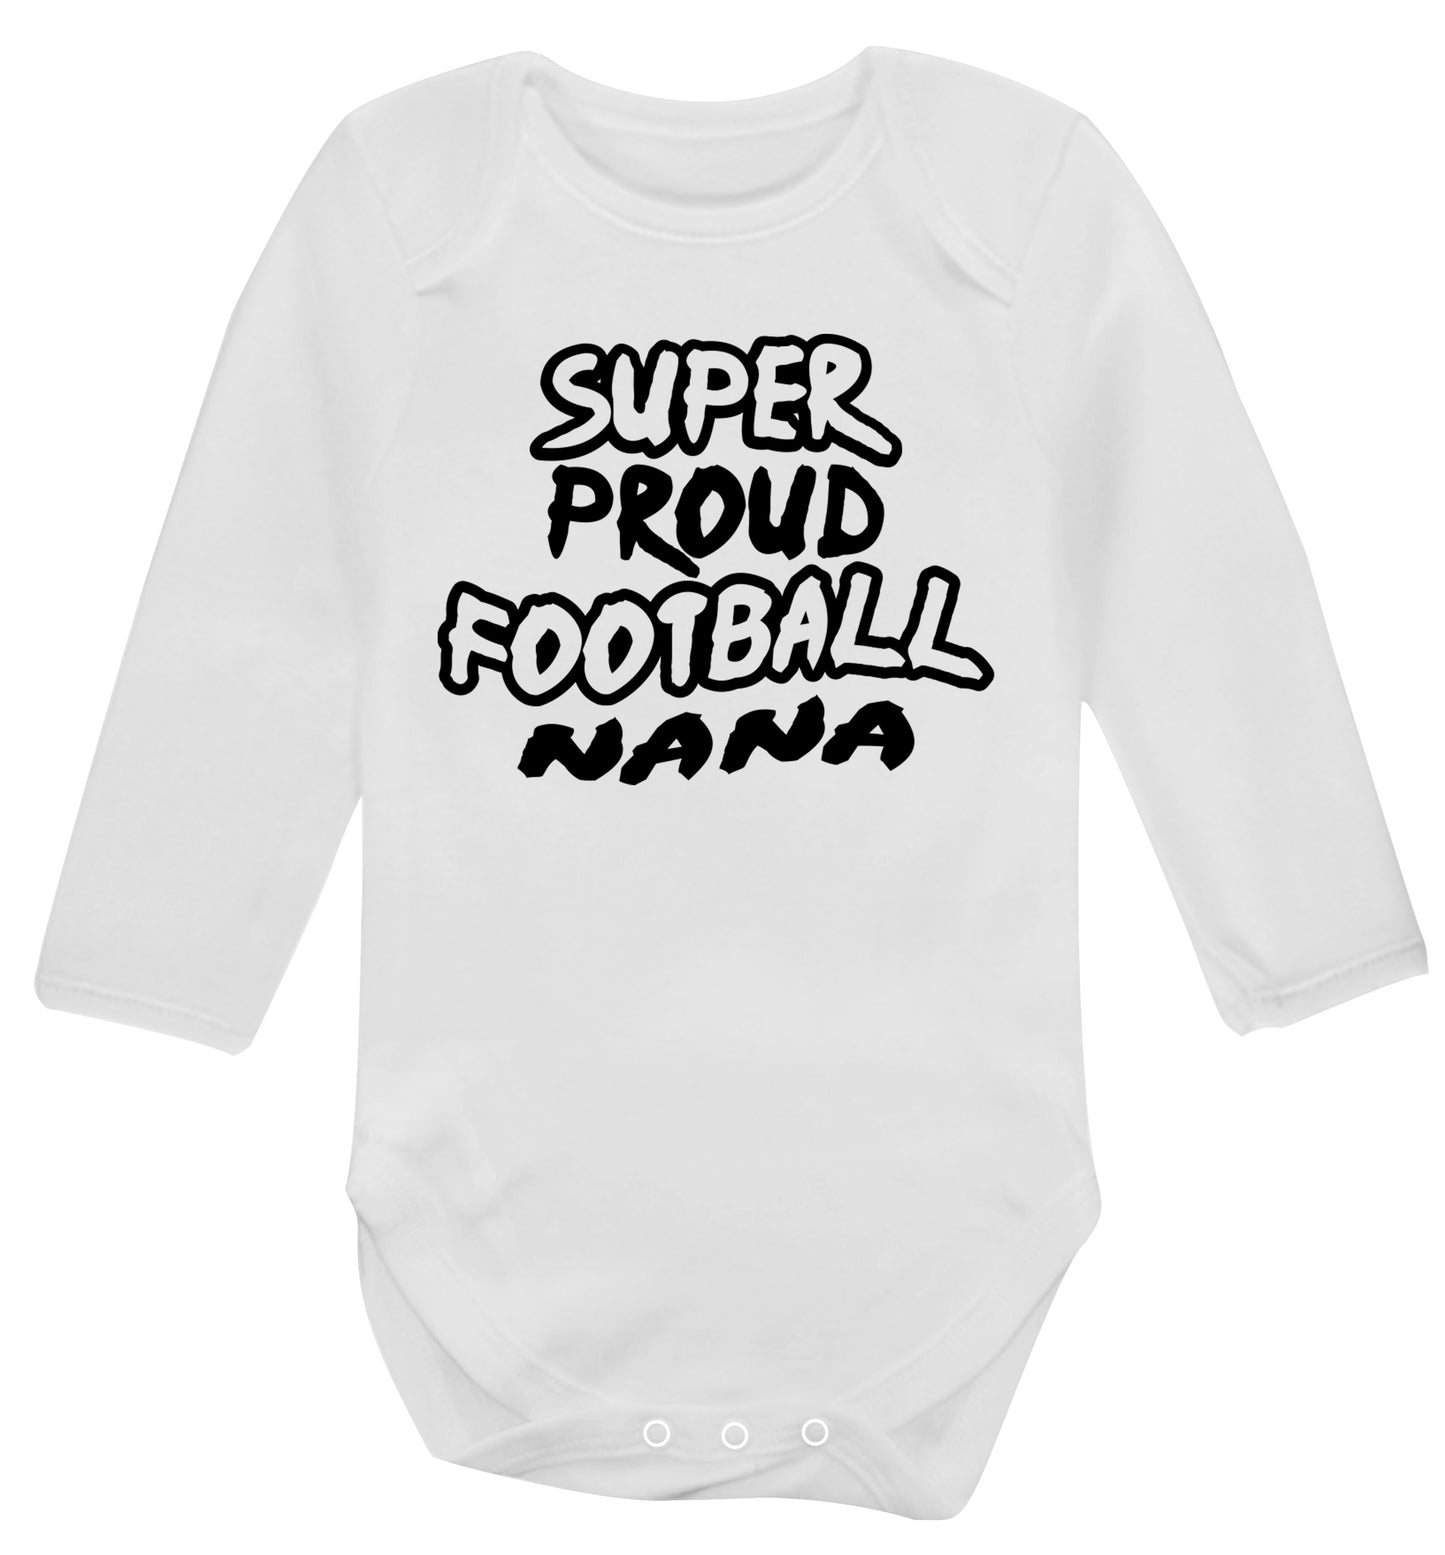 Super proud football nana Baby Vest long sleeved white 6-12 months